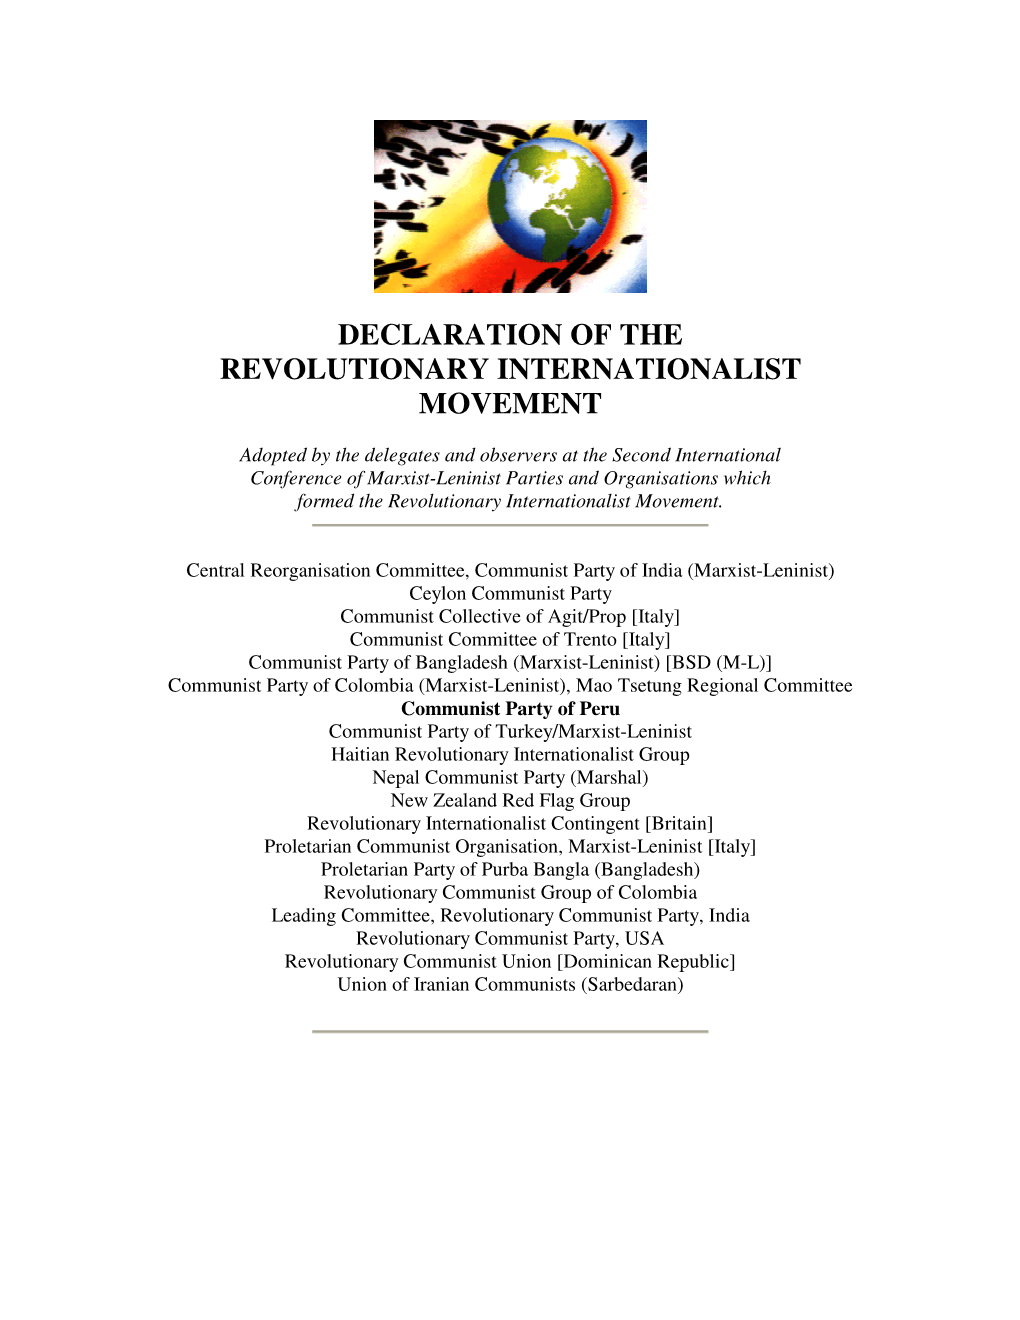 Declaration of the Revolutionary Internationalist Movement